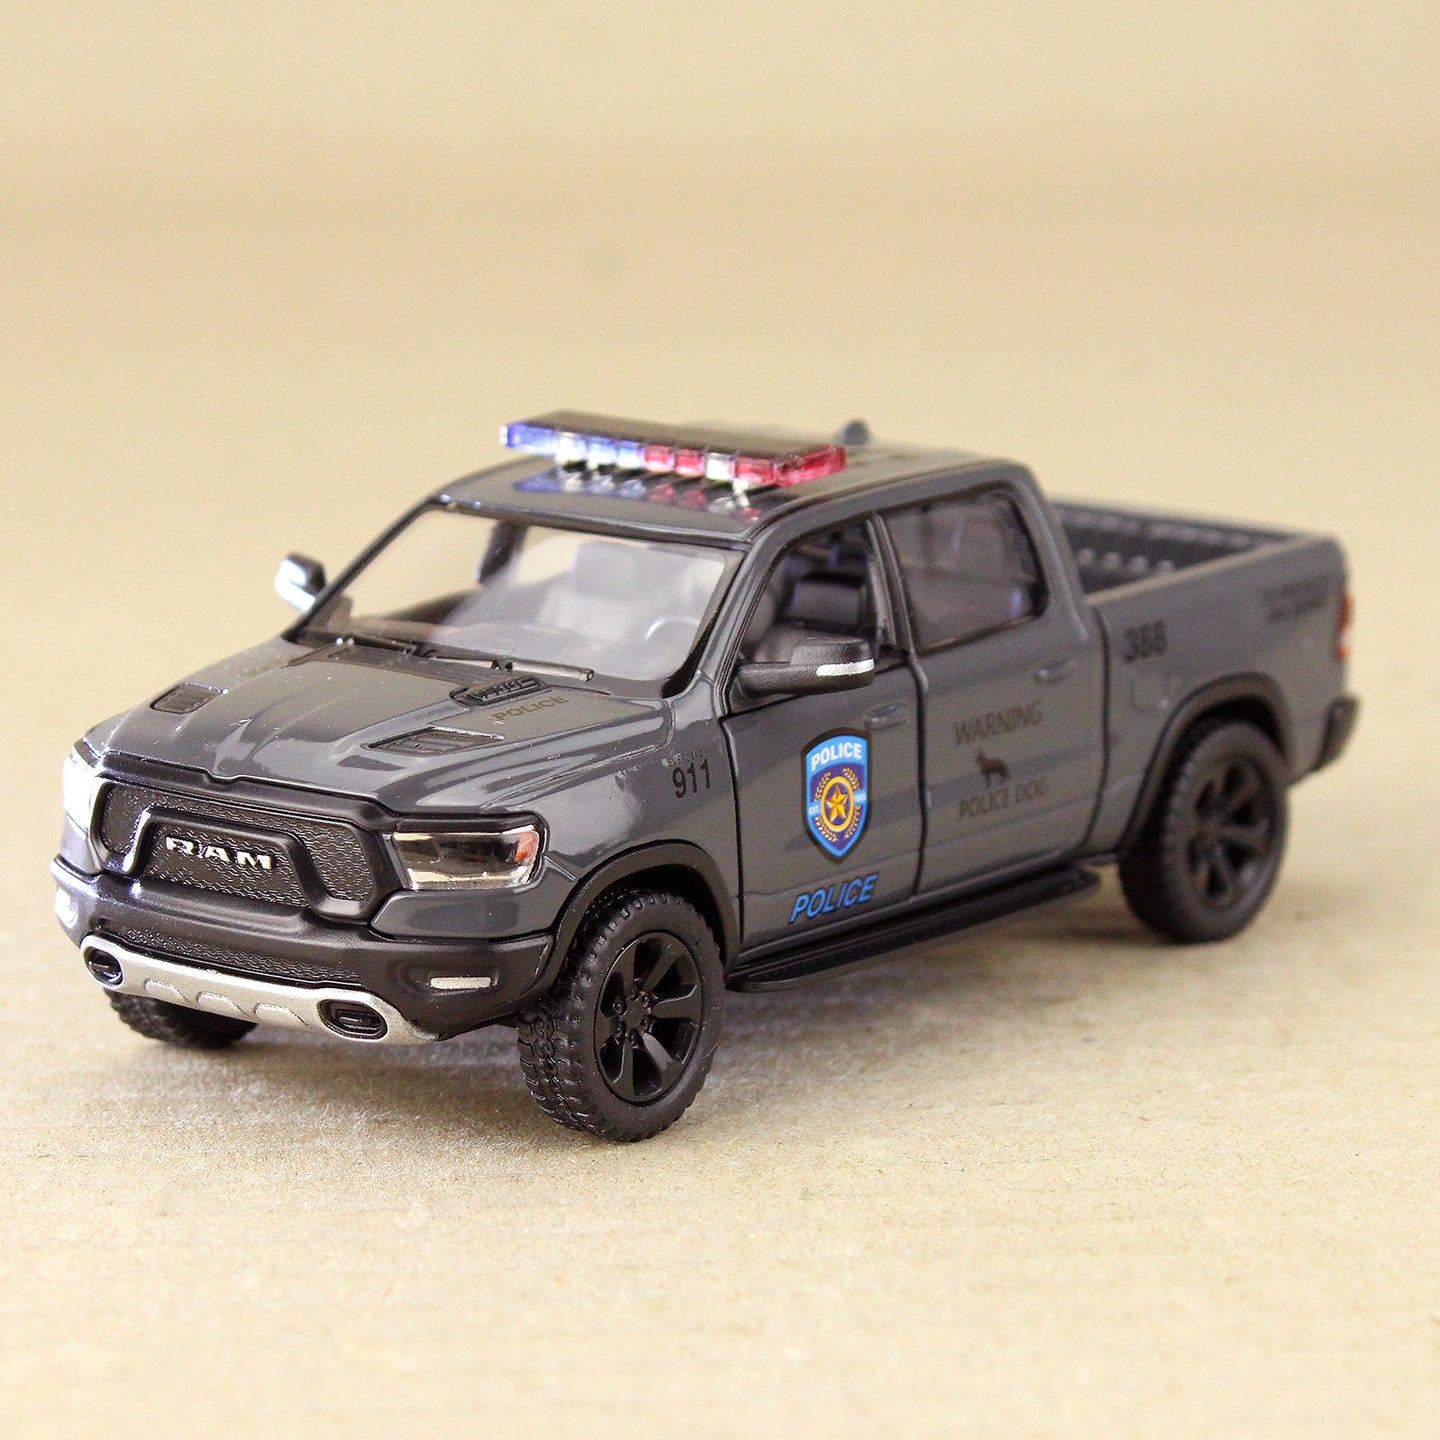 2019 Dodge Ram 1500 Ute - Police Edition